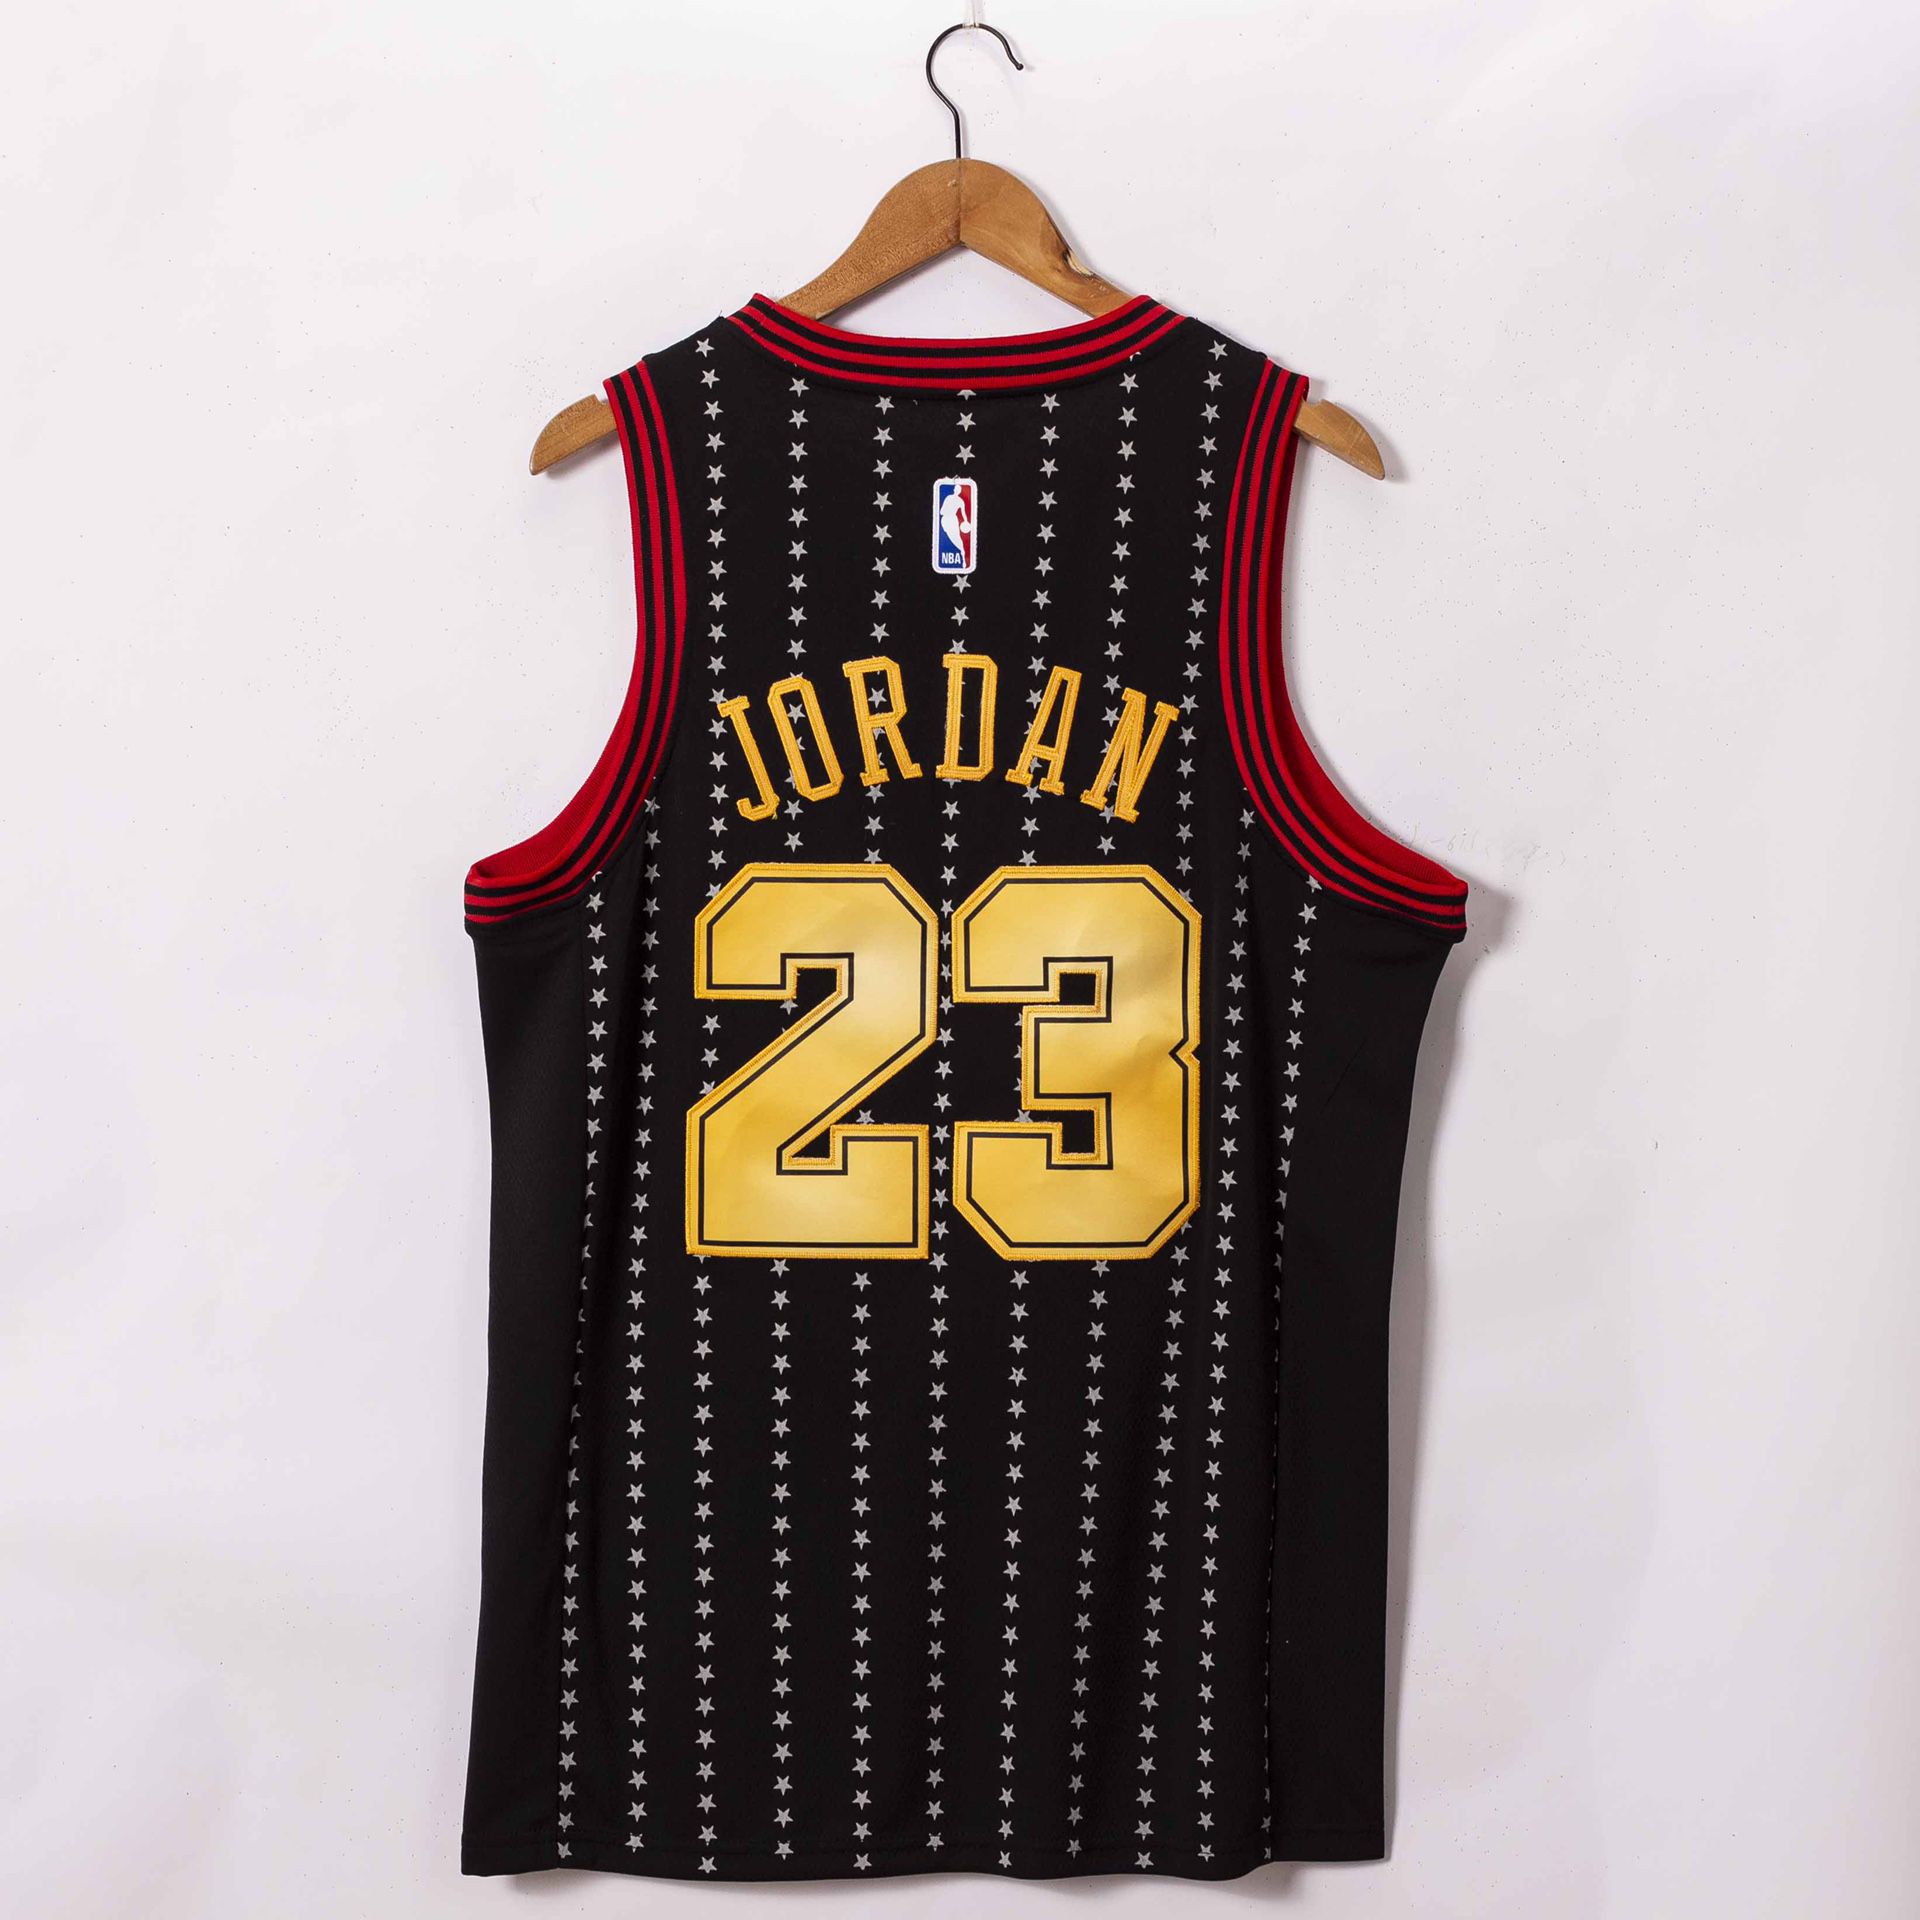 Nba Jordan 23 Jersey 